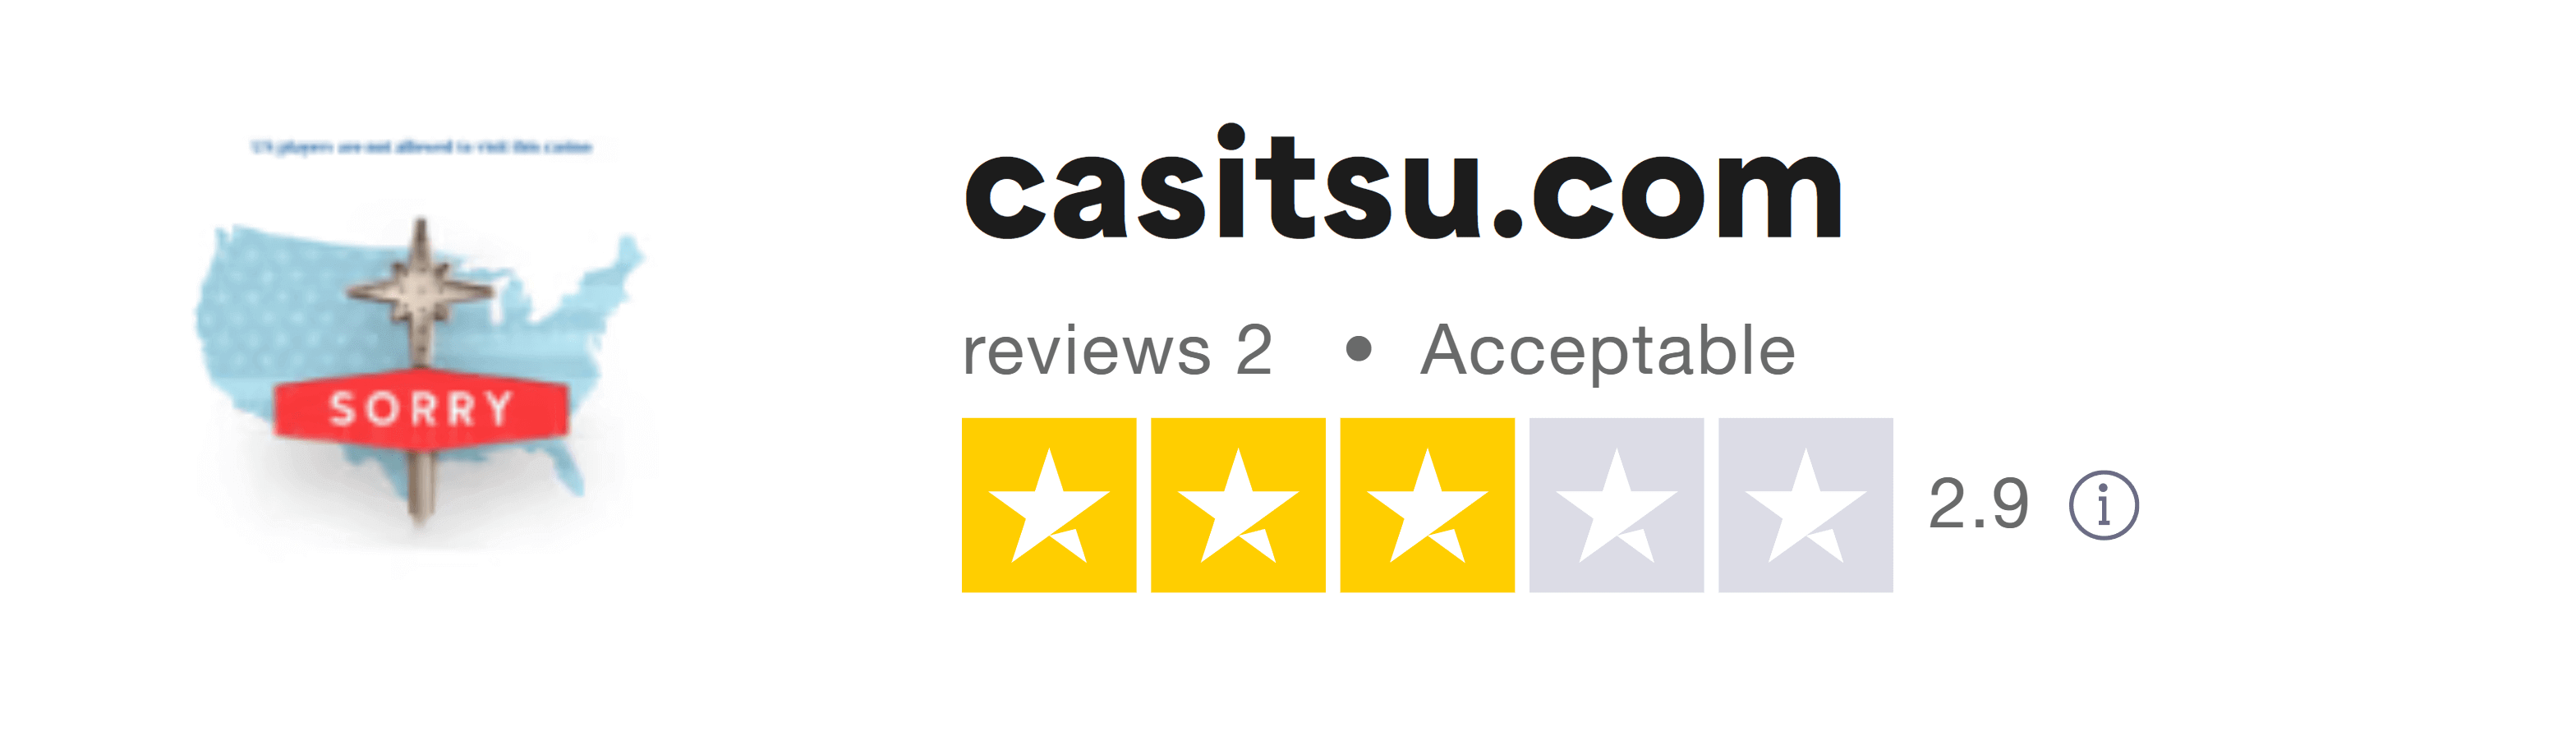 Trustpilot rating screenshot for the Casitsu